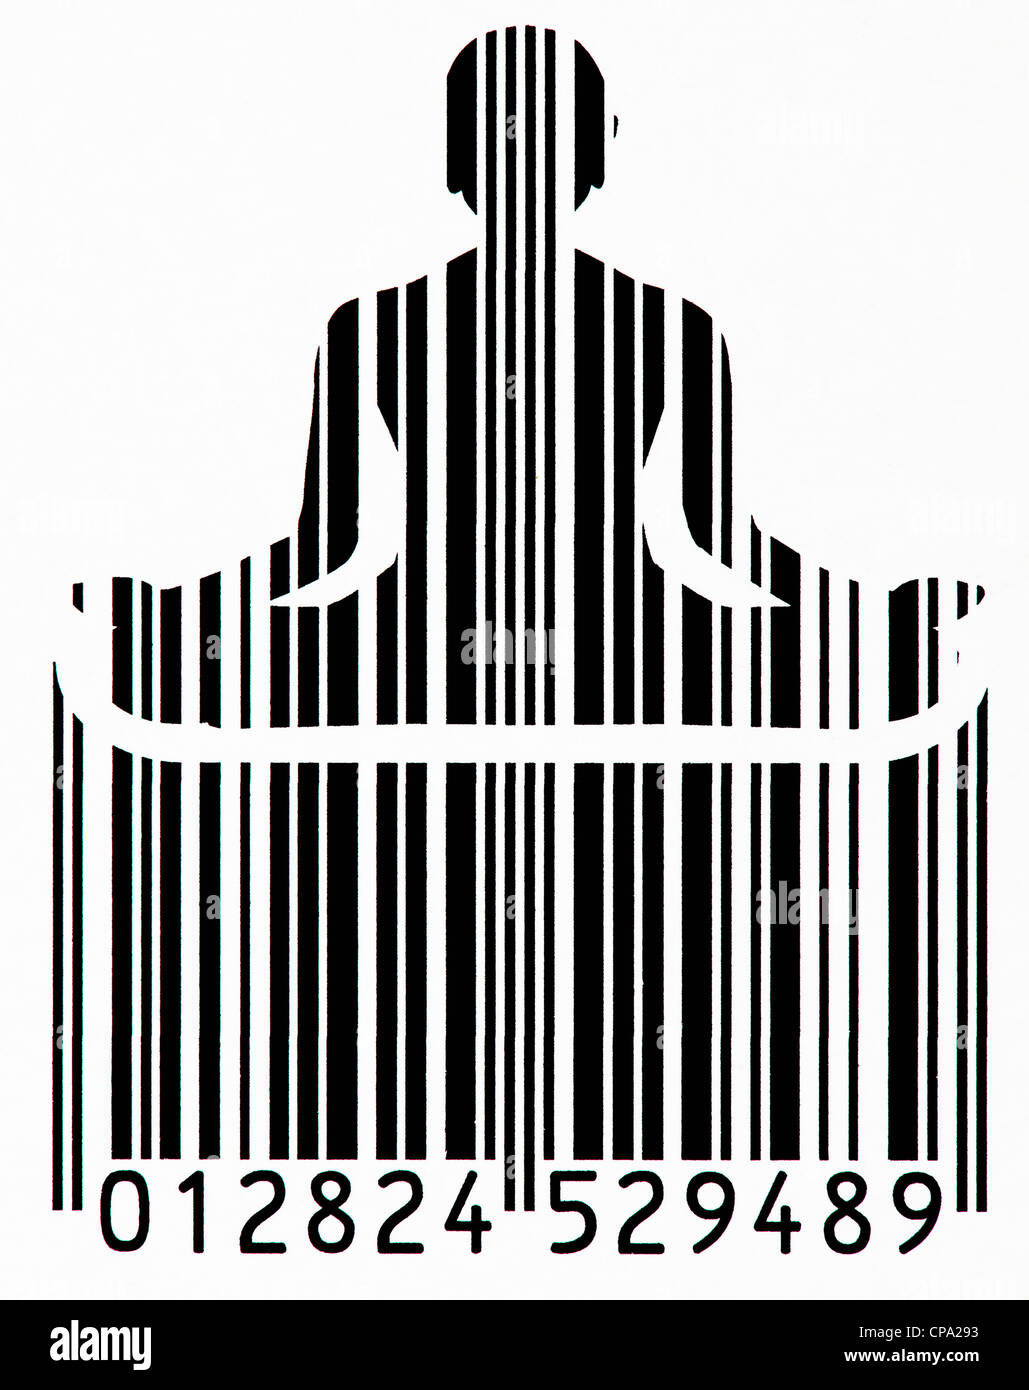 Yogi tea bouddha barcode Banque D'Images